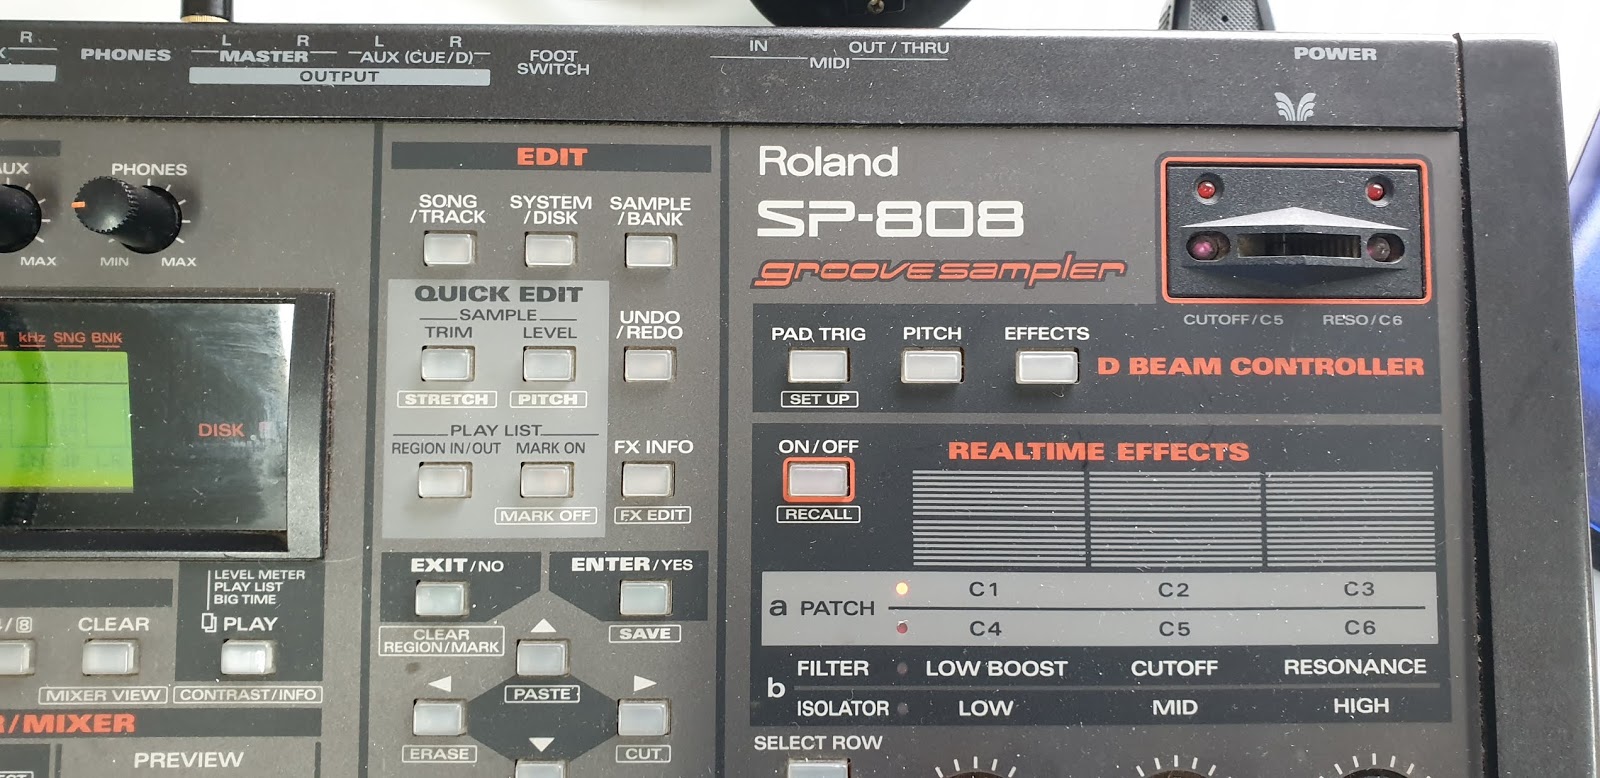 JonDent - Exploring Electronic Music: Roland SP 808 Groove sampler